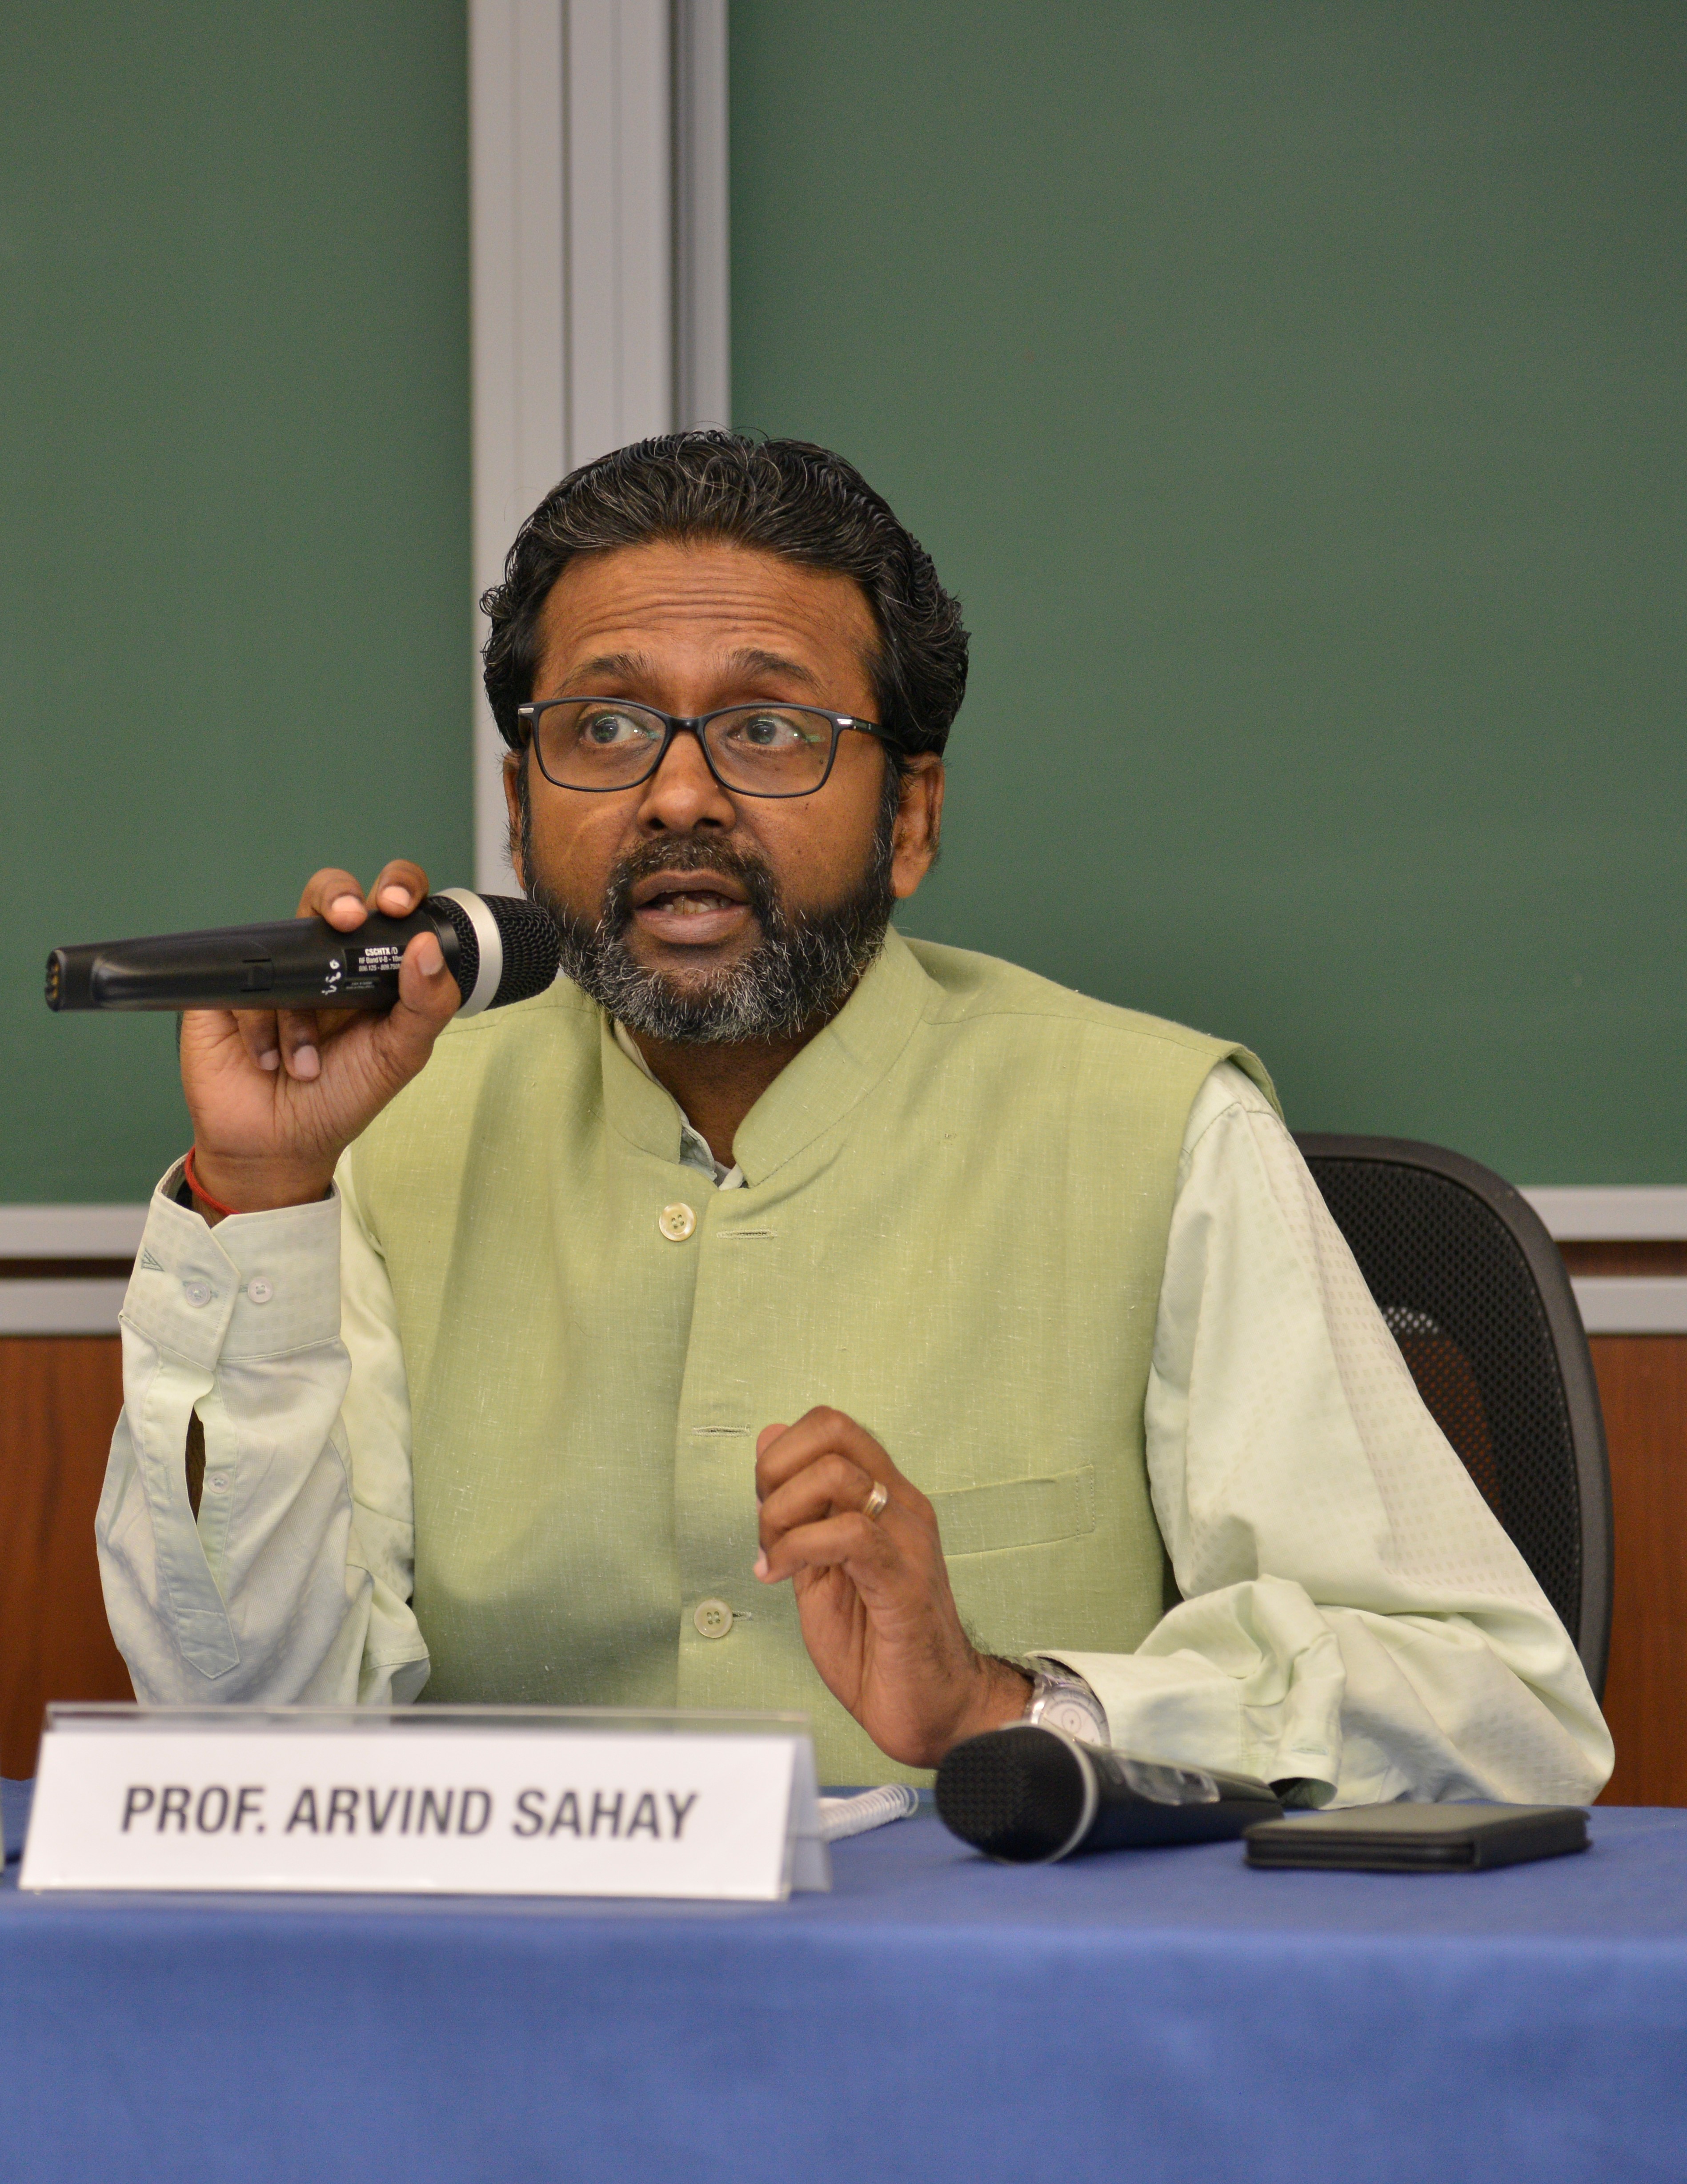 Dr. Arvind Sahay